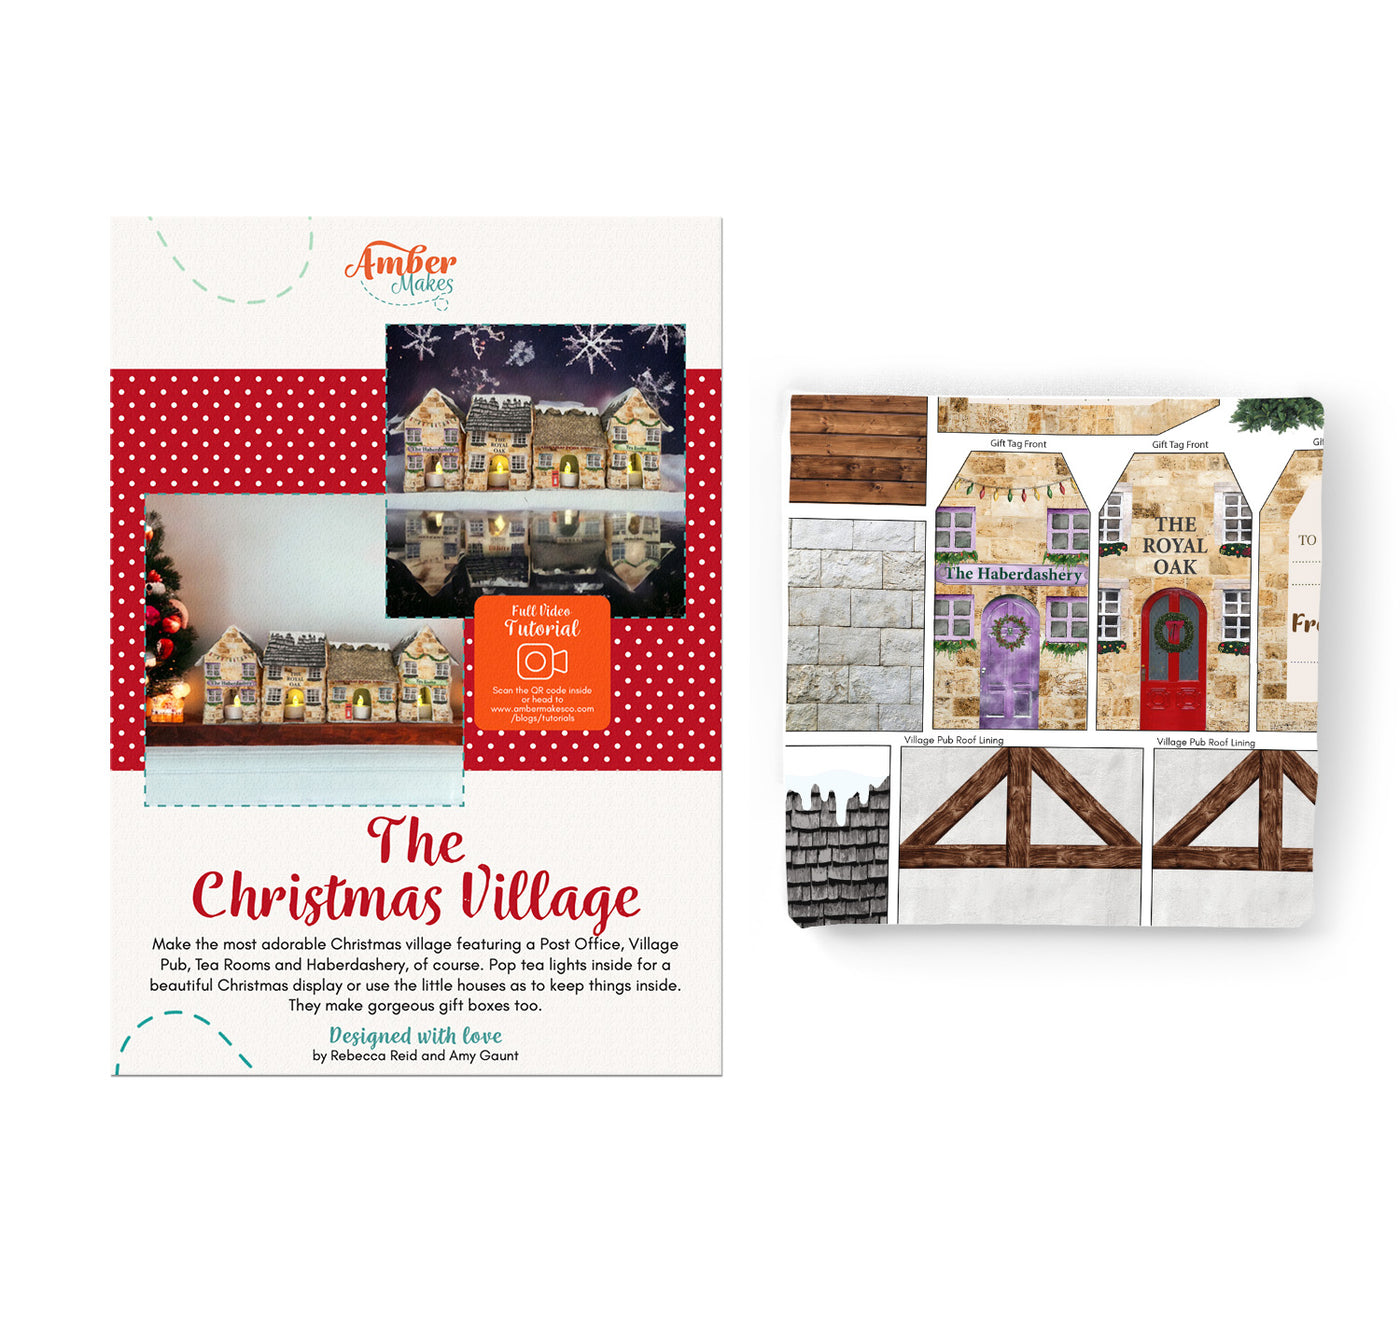 Christmas Sampler Large Label Set - gift for sewing, knitting